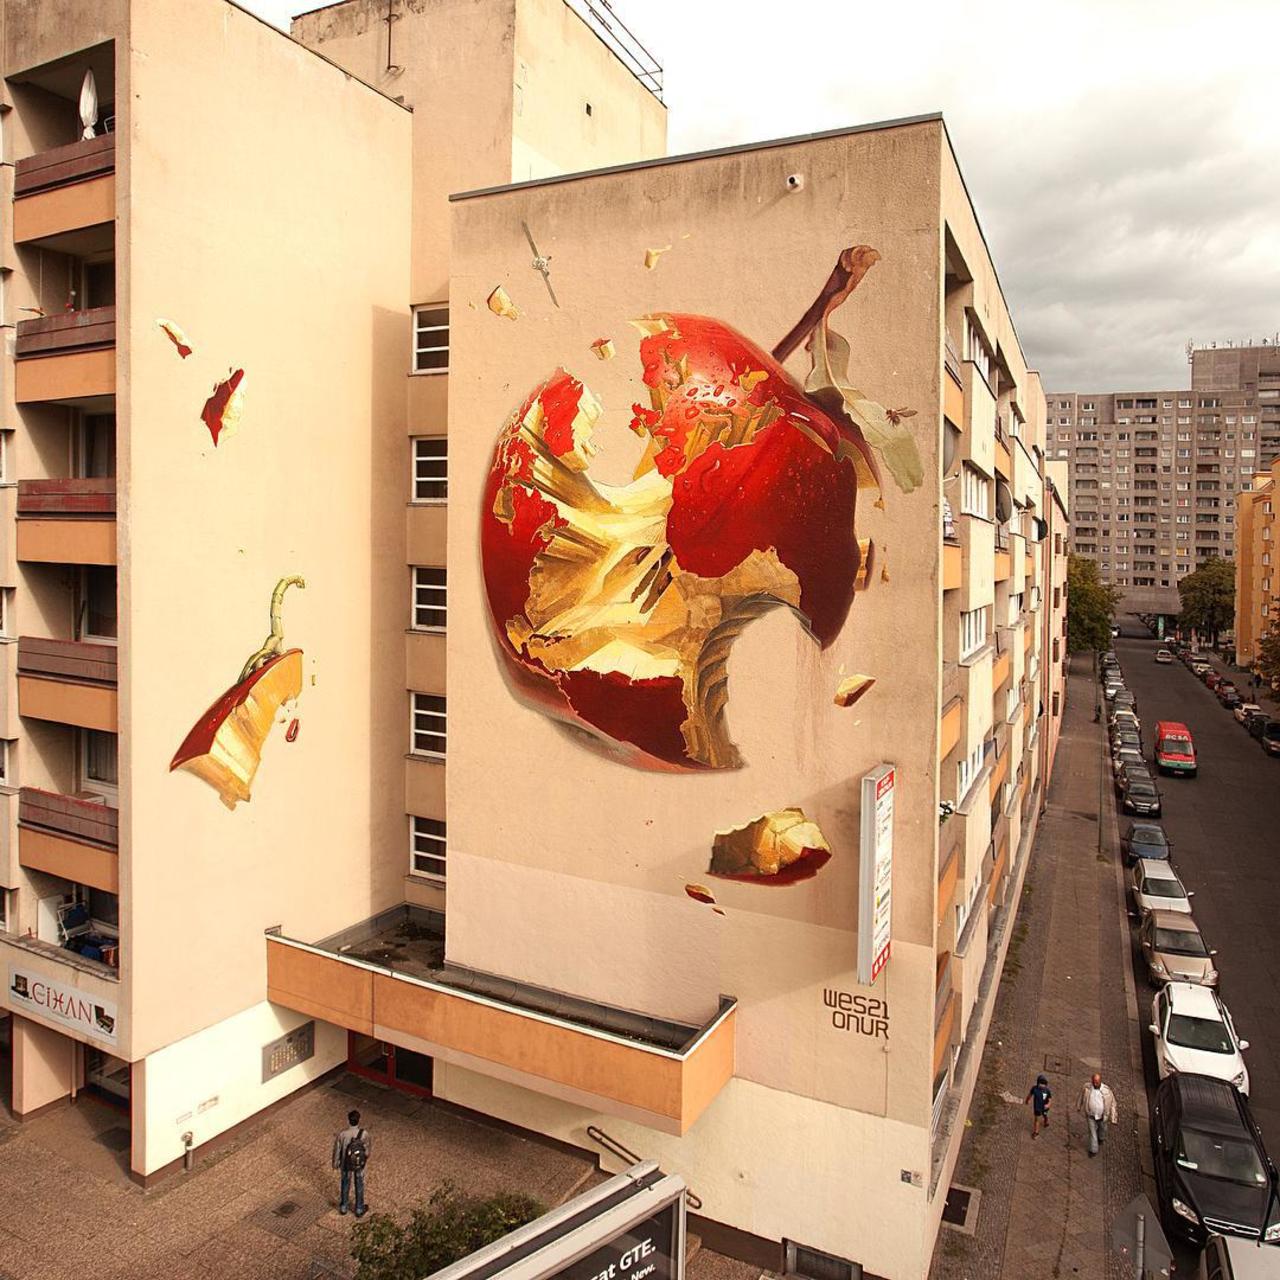 'SWEETEST SIN' by wes21_schwarzmaler and onurpainting, Berlin, Prinzenstrasse 19. #StreetArt #Graffiti #Mural https://t.co/FxRlX9r0Ad